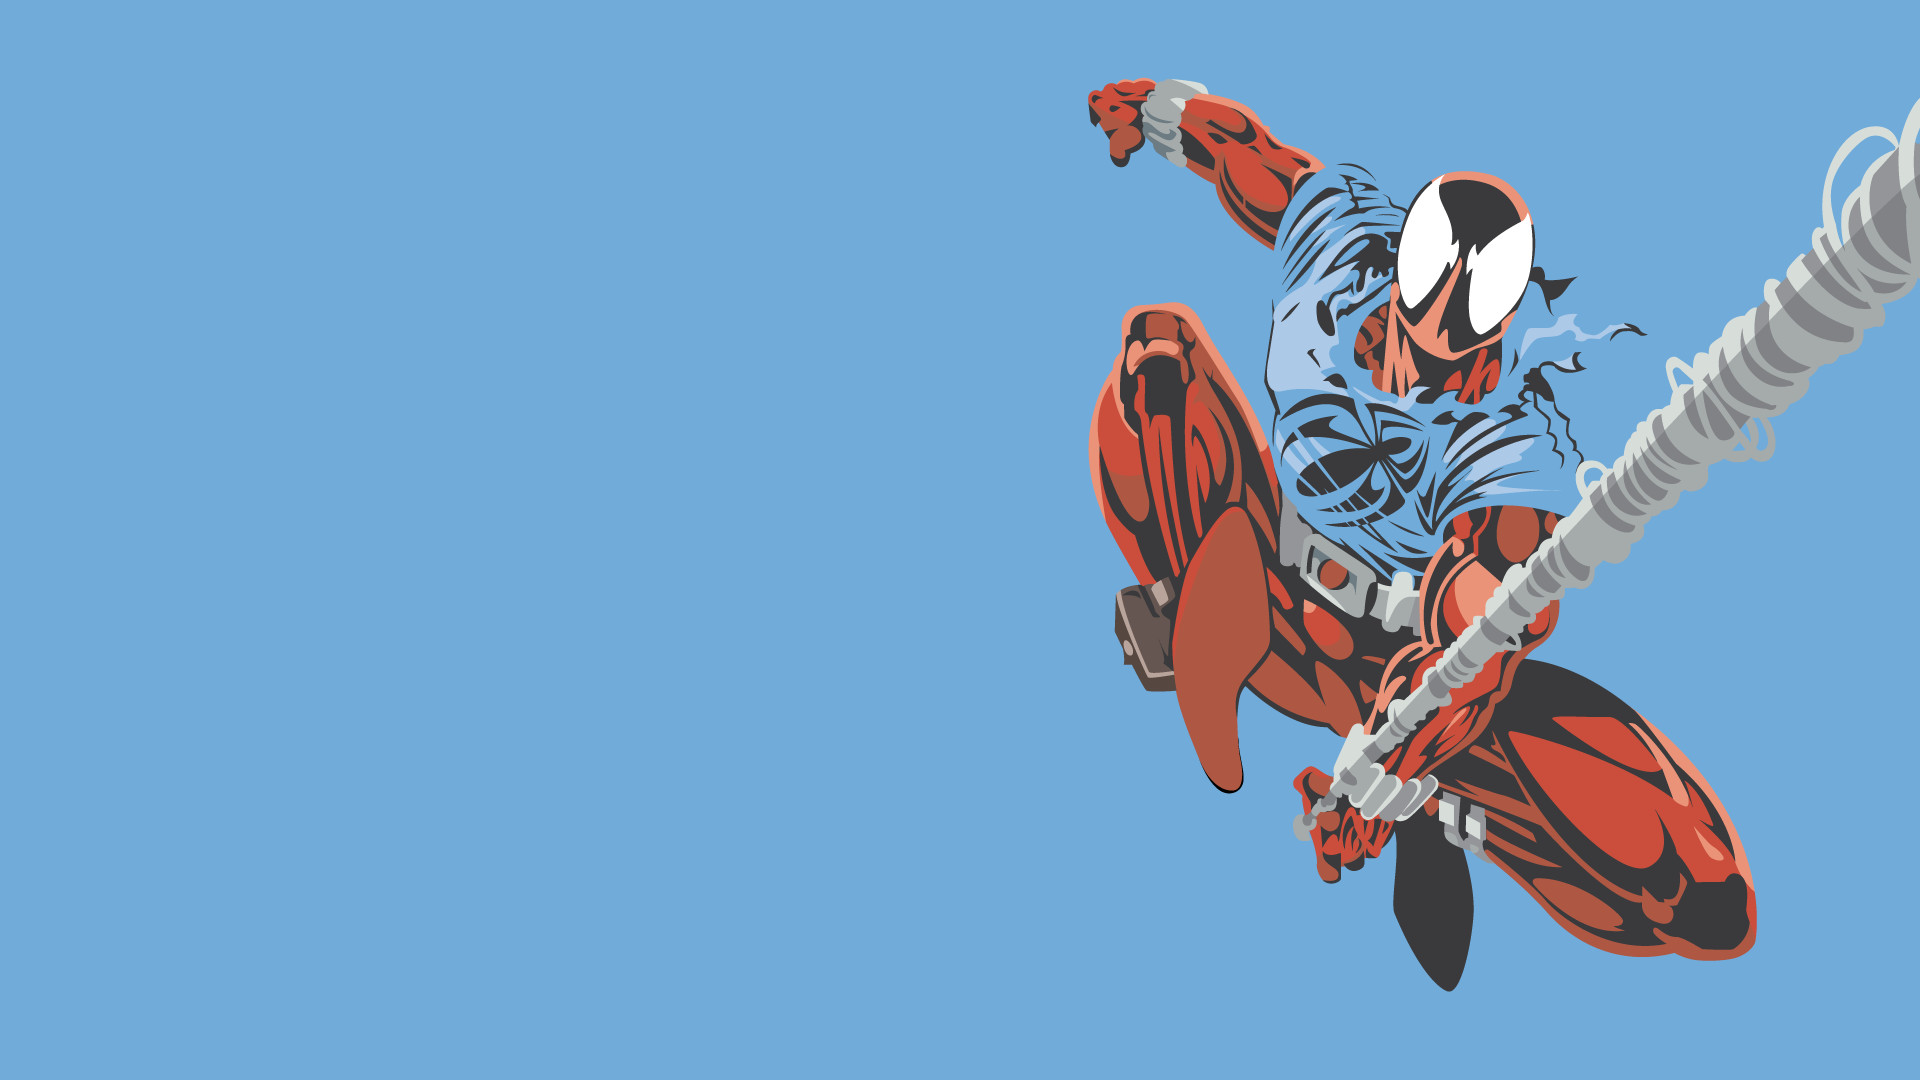 1920x1080 Spider-Man Comic Wallpaper - WallpaperSafari Spiderman Cartoon Episode 1 -  Bubble, Bubble, Oil & Trouble .